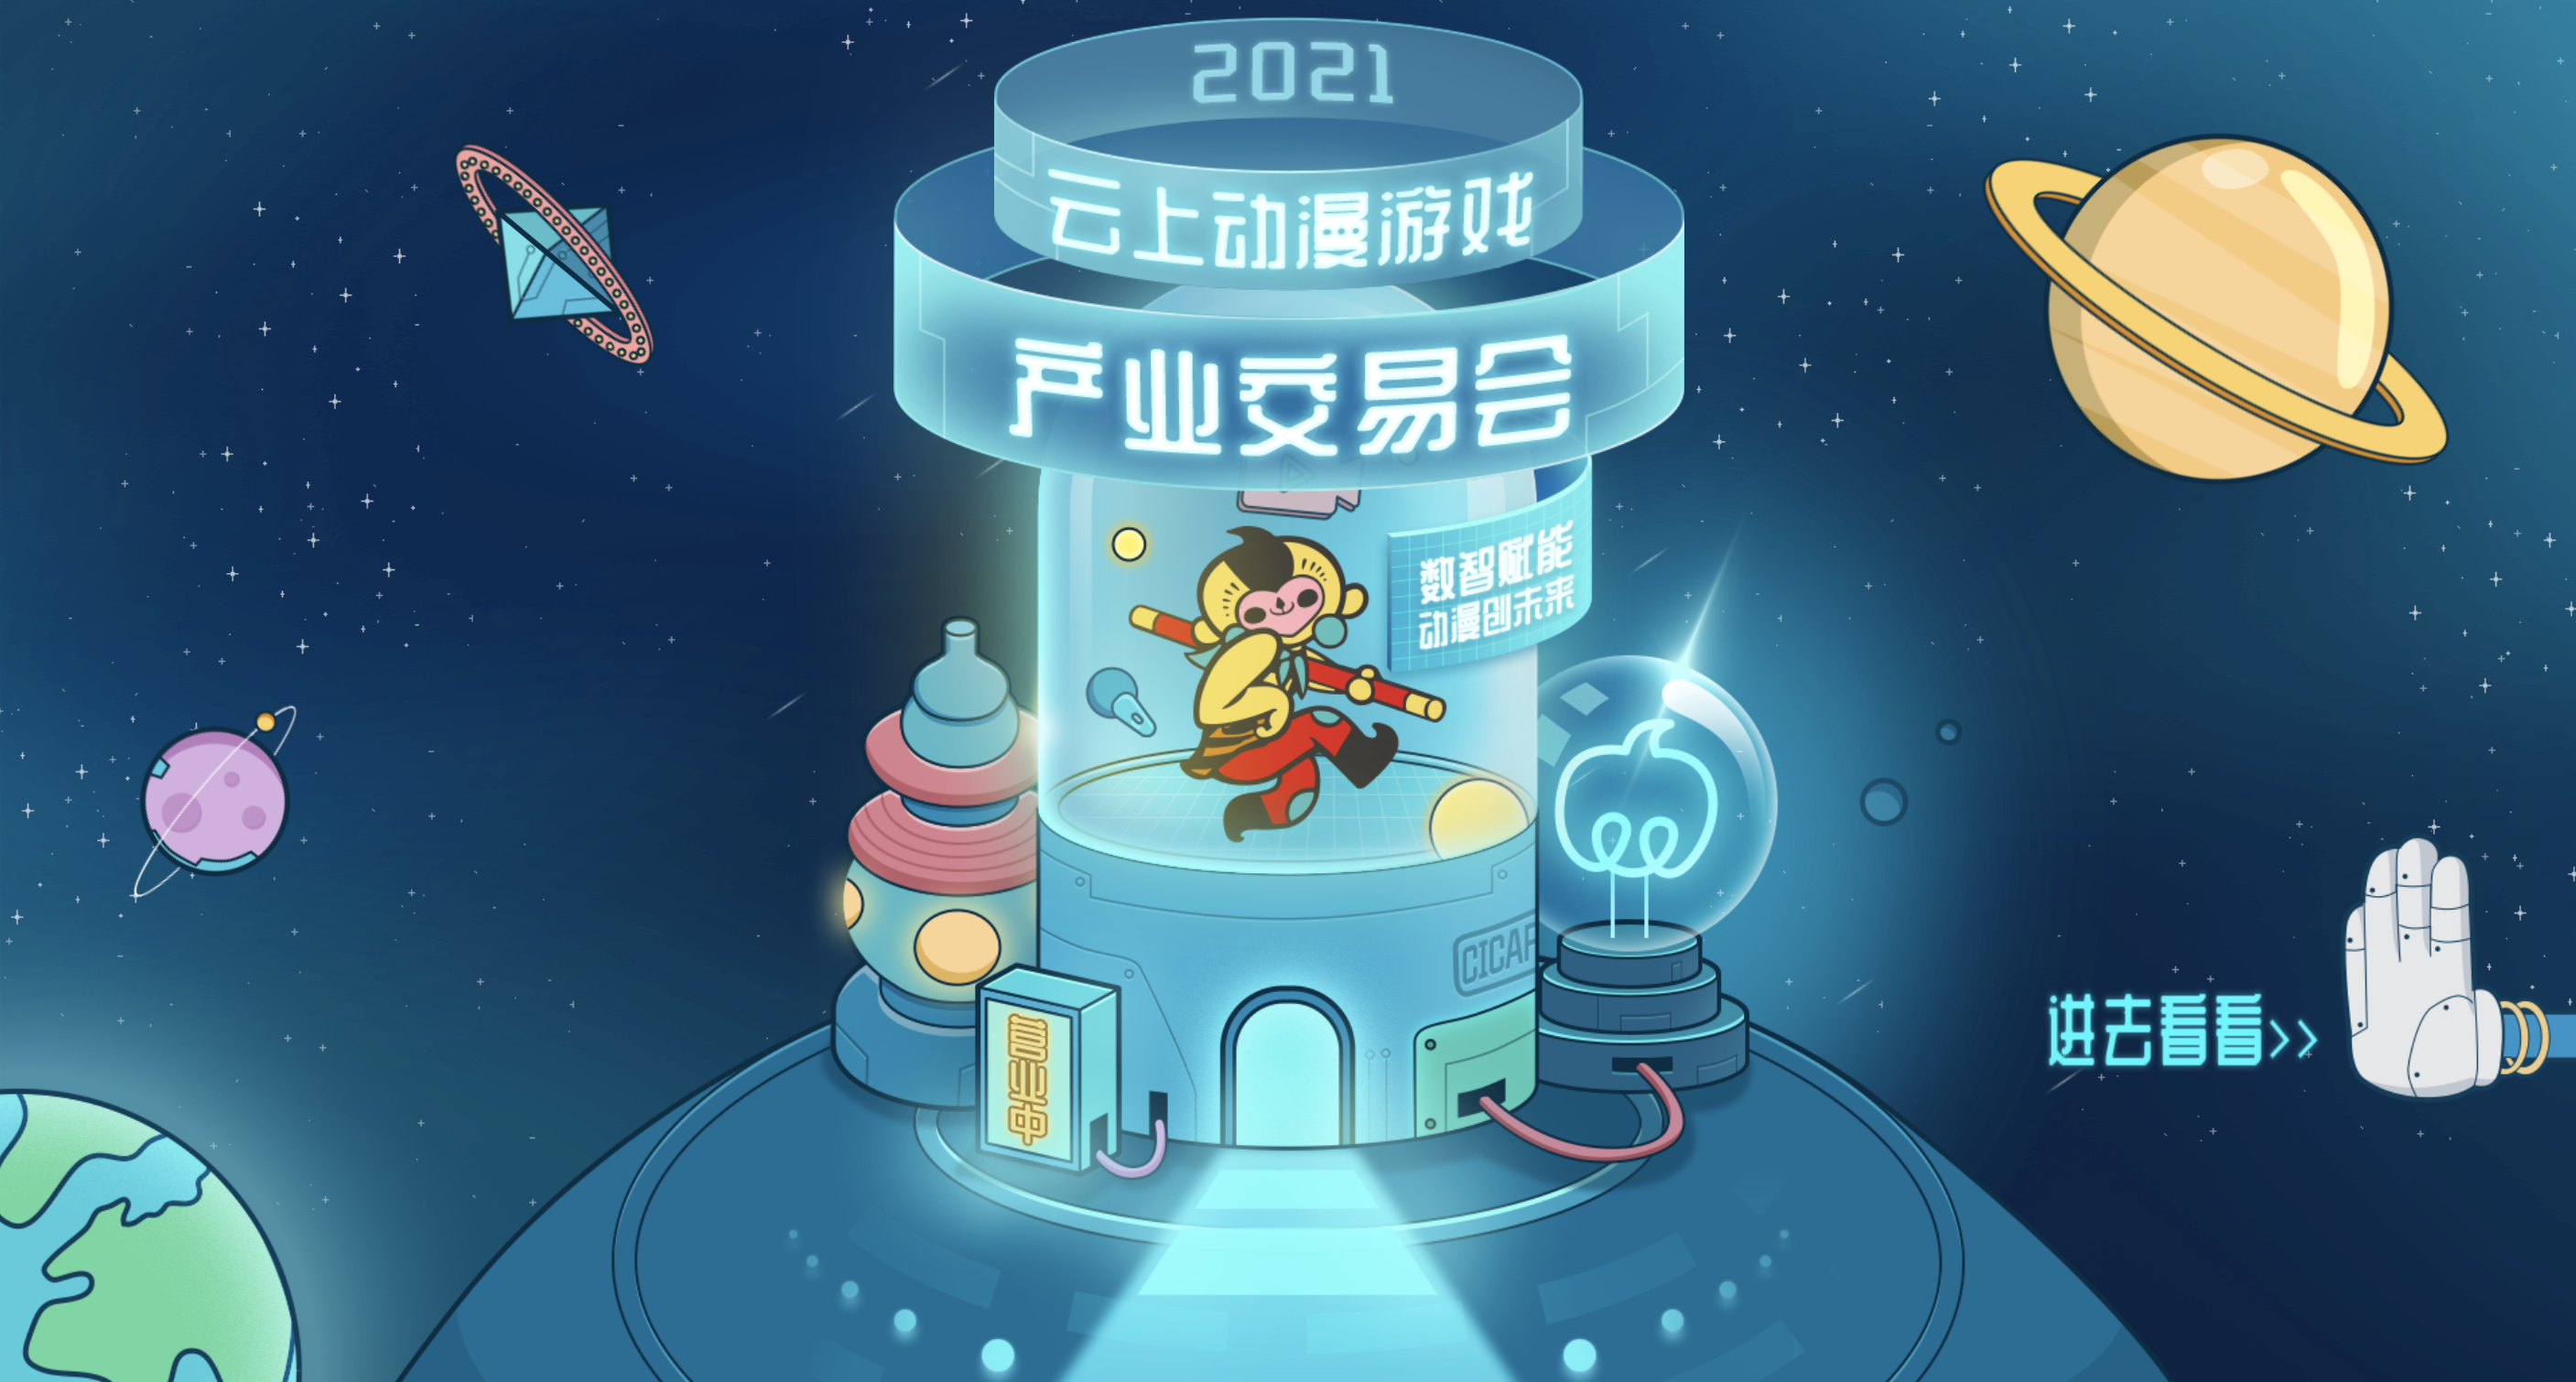 China Int'l Cartoon & Animation Festival 2021 opens in Hangzhou - CGTN